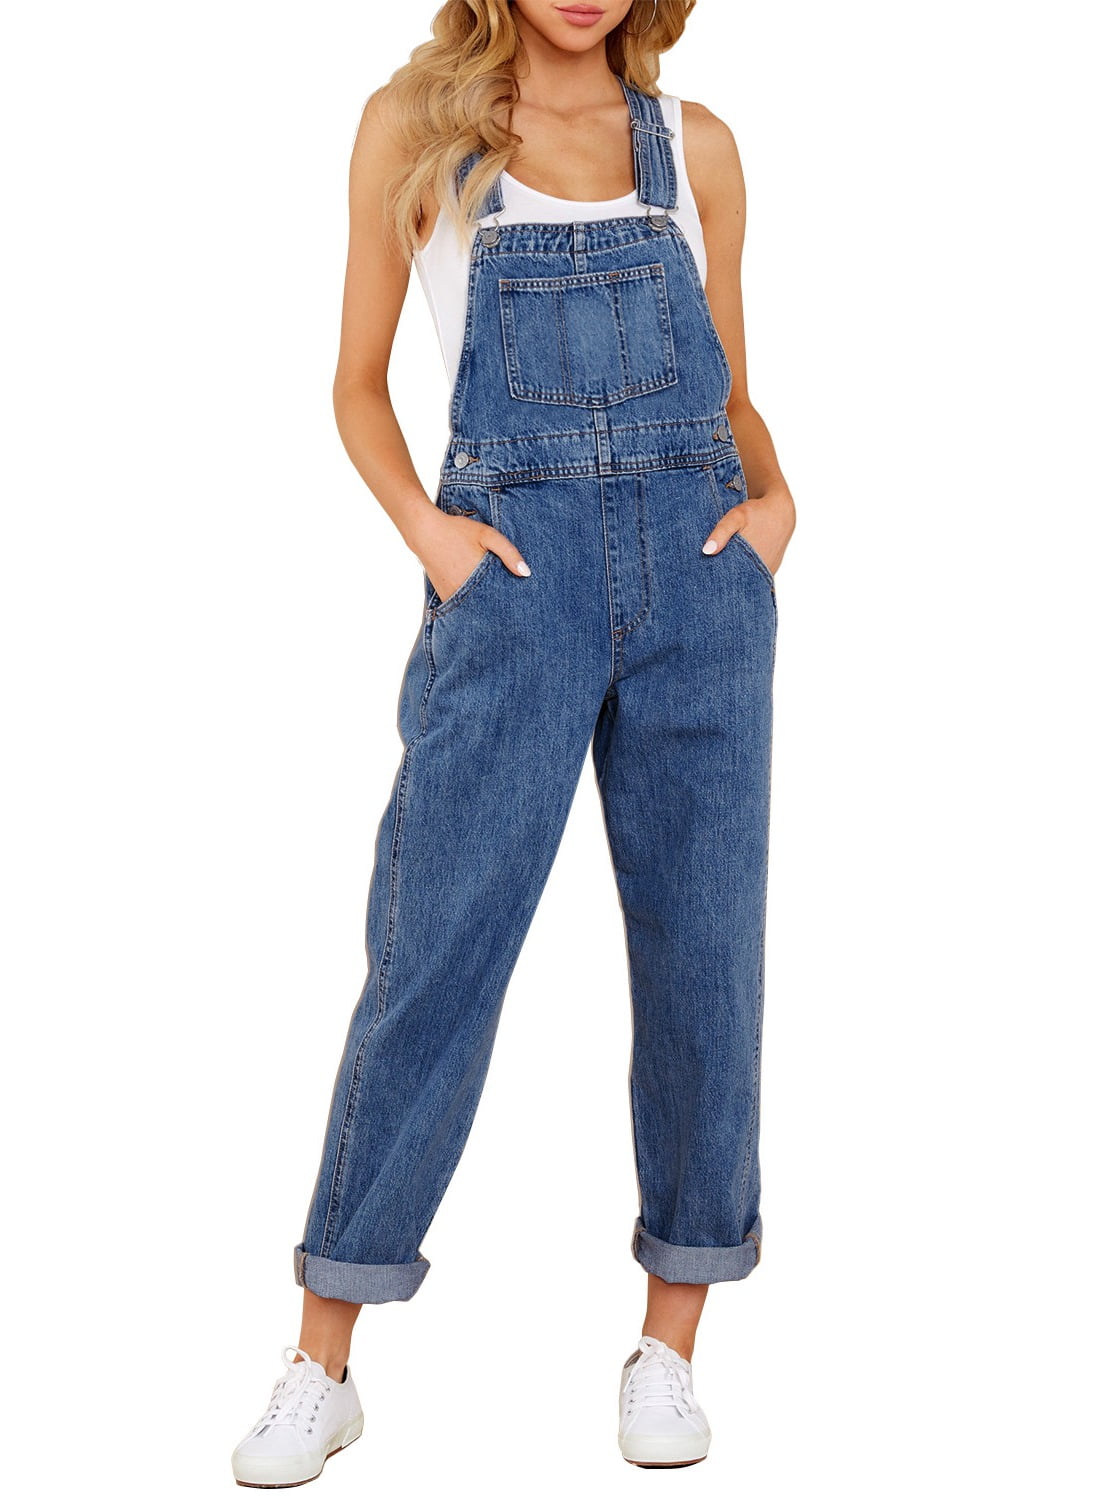 LookbookStore Women's Casual Stretch Adjustable Straps Denim Bib Overalls Pants Jumpsuits Sizes XS-2XL - Walmart.com